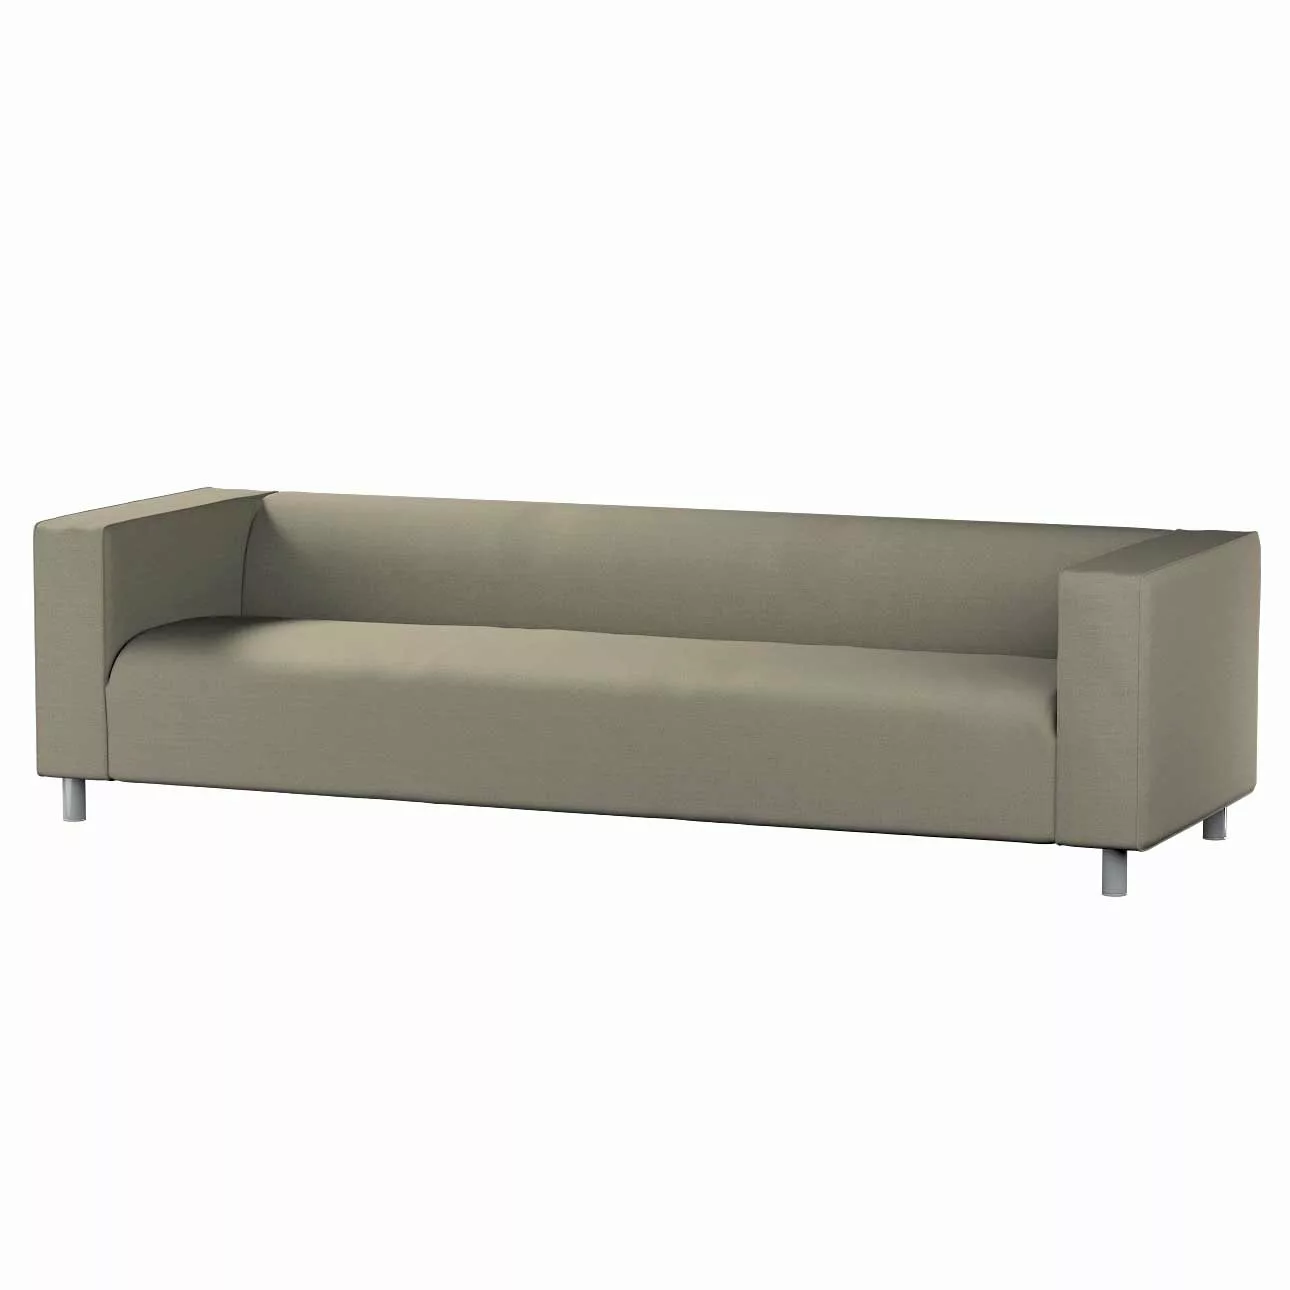 Bezug für Klippan 4-Sitzer Sofa, grau-braun, Bezug für Klippan 4-Sitzer, Li günstig online kaufen